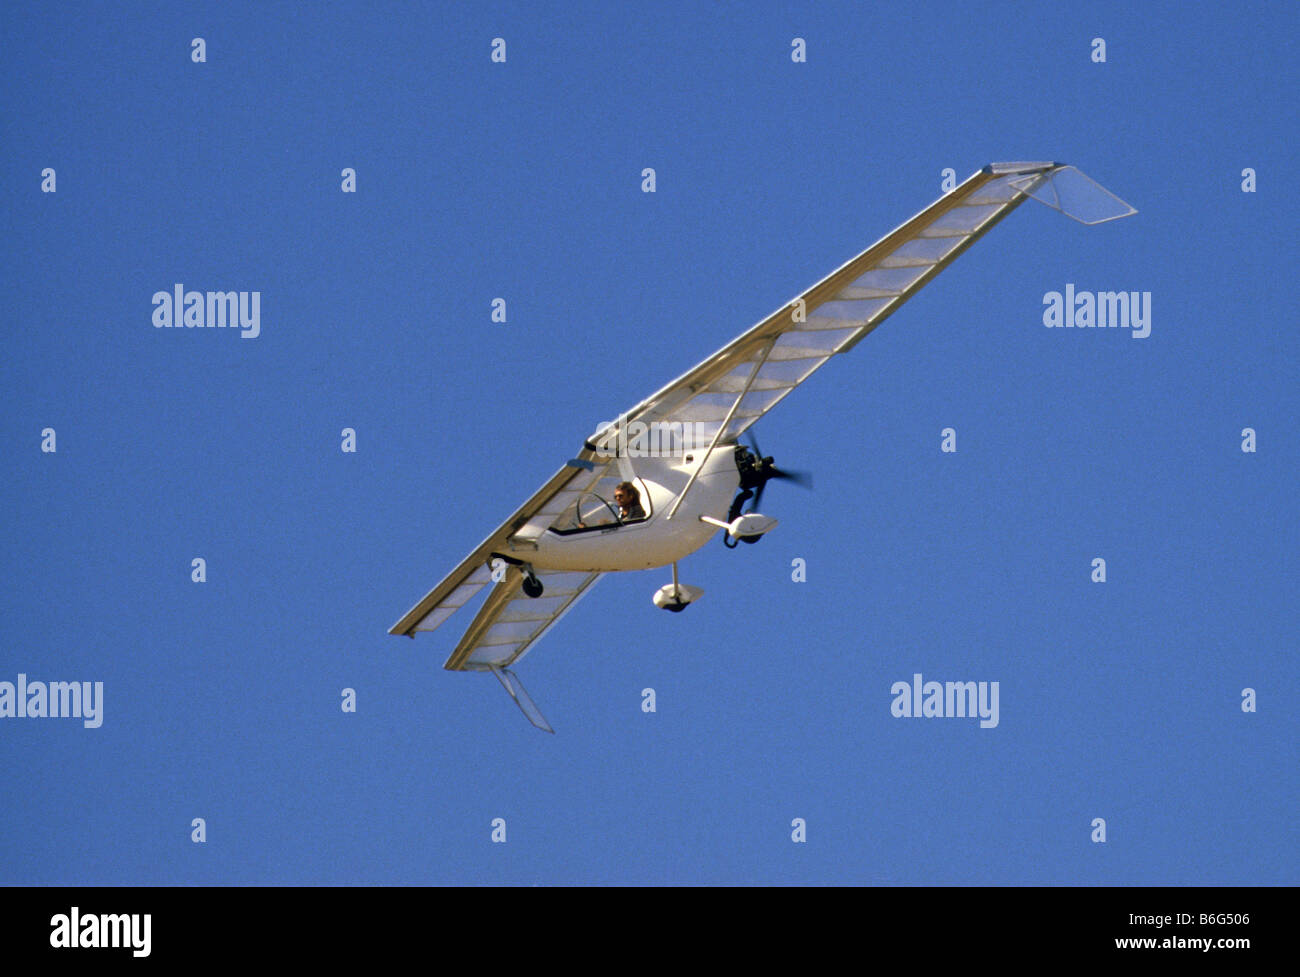 Ultralight experimental aircraft against clear blue sky. Stock Photo